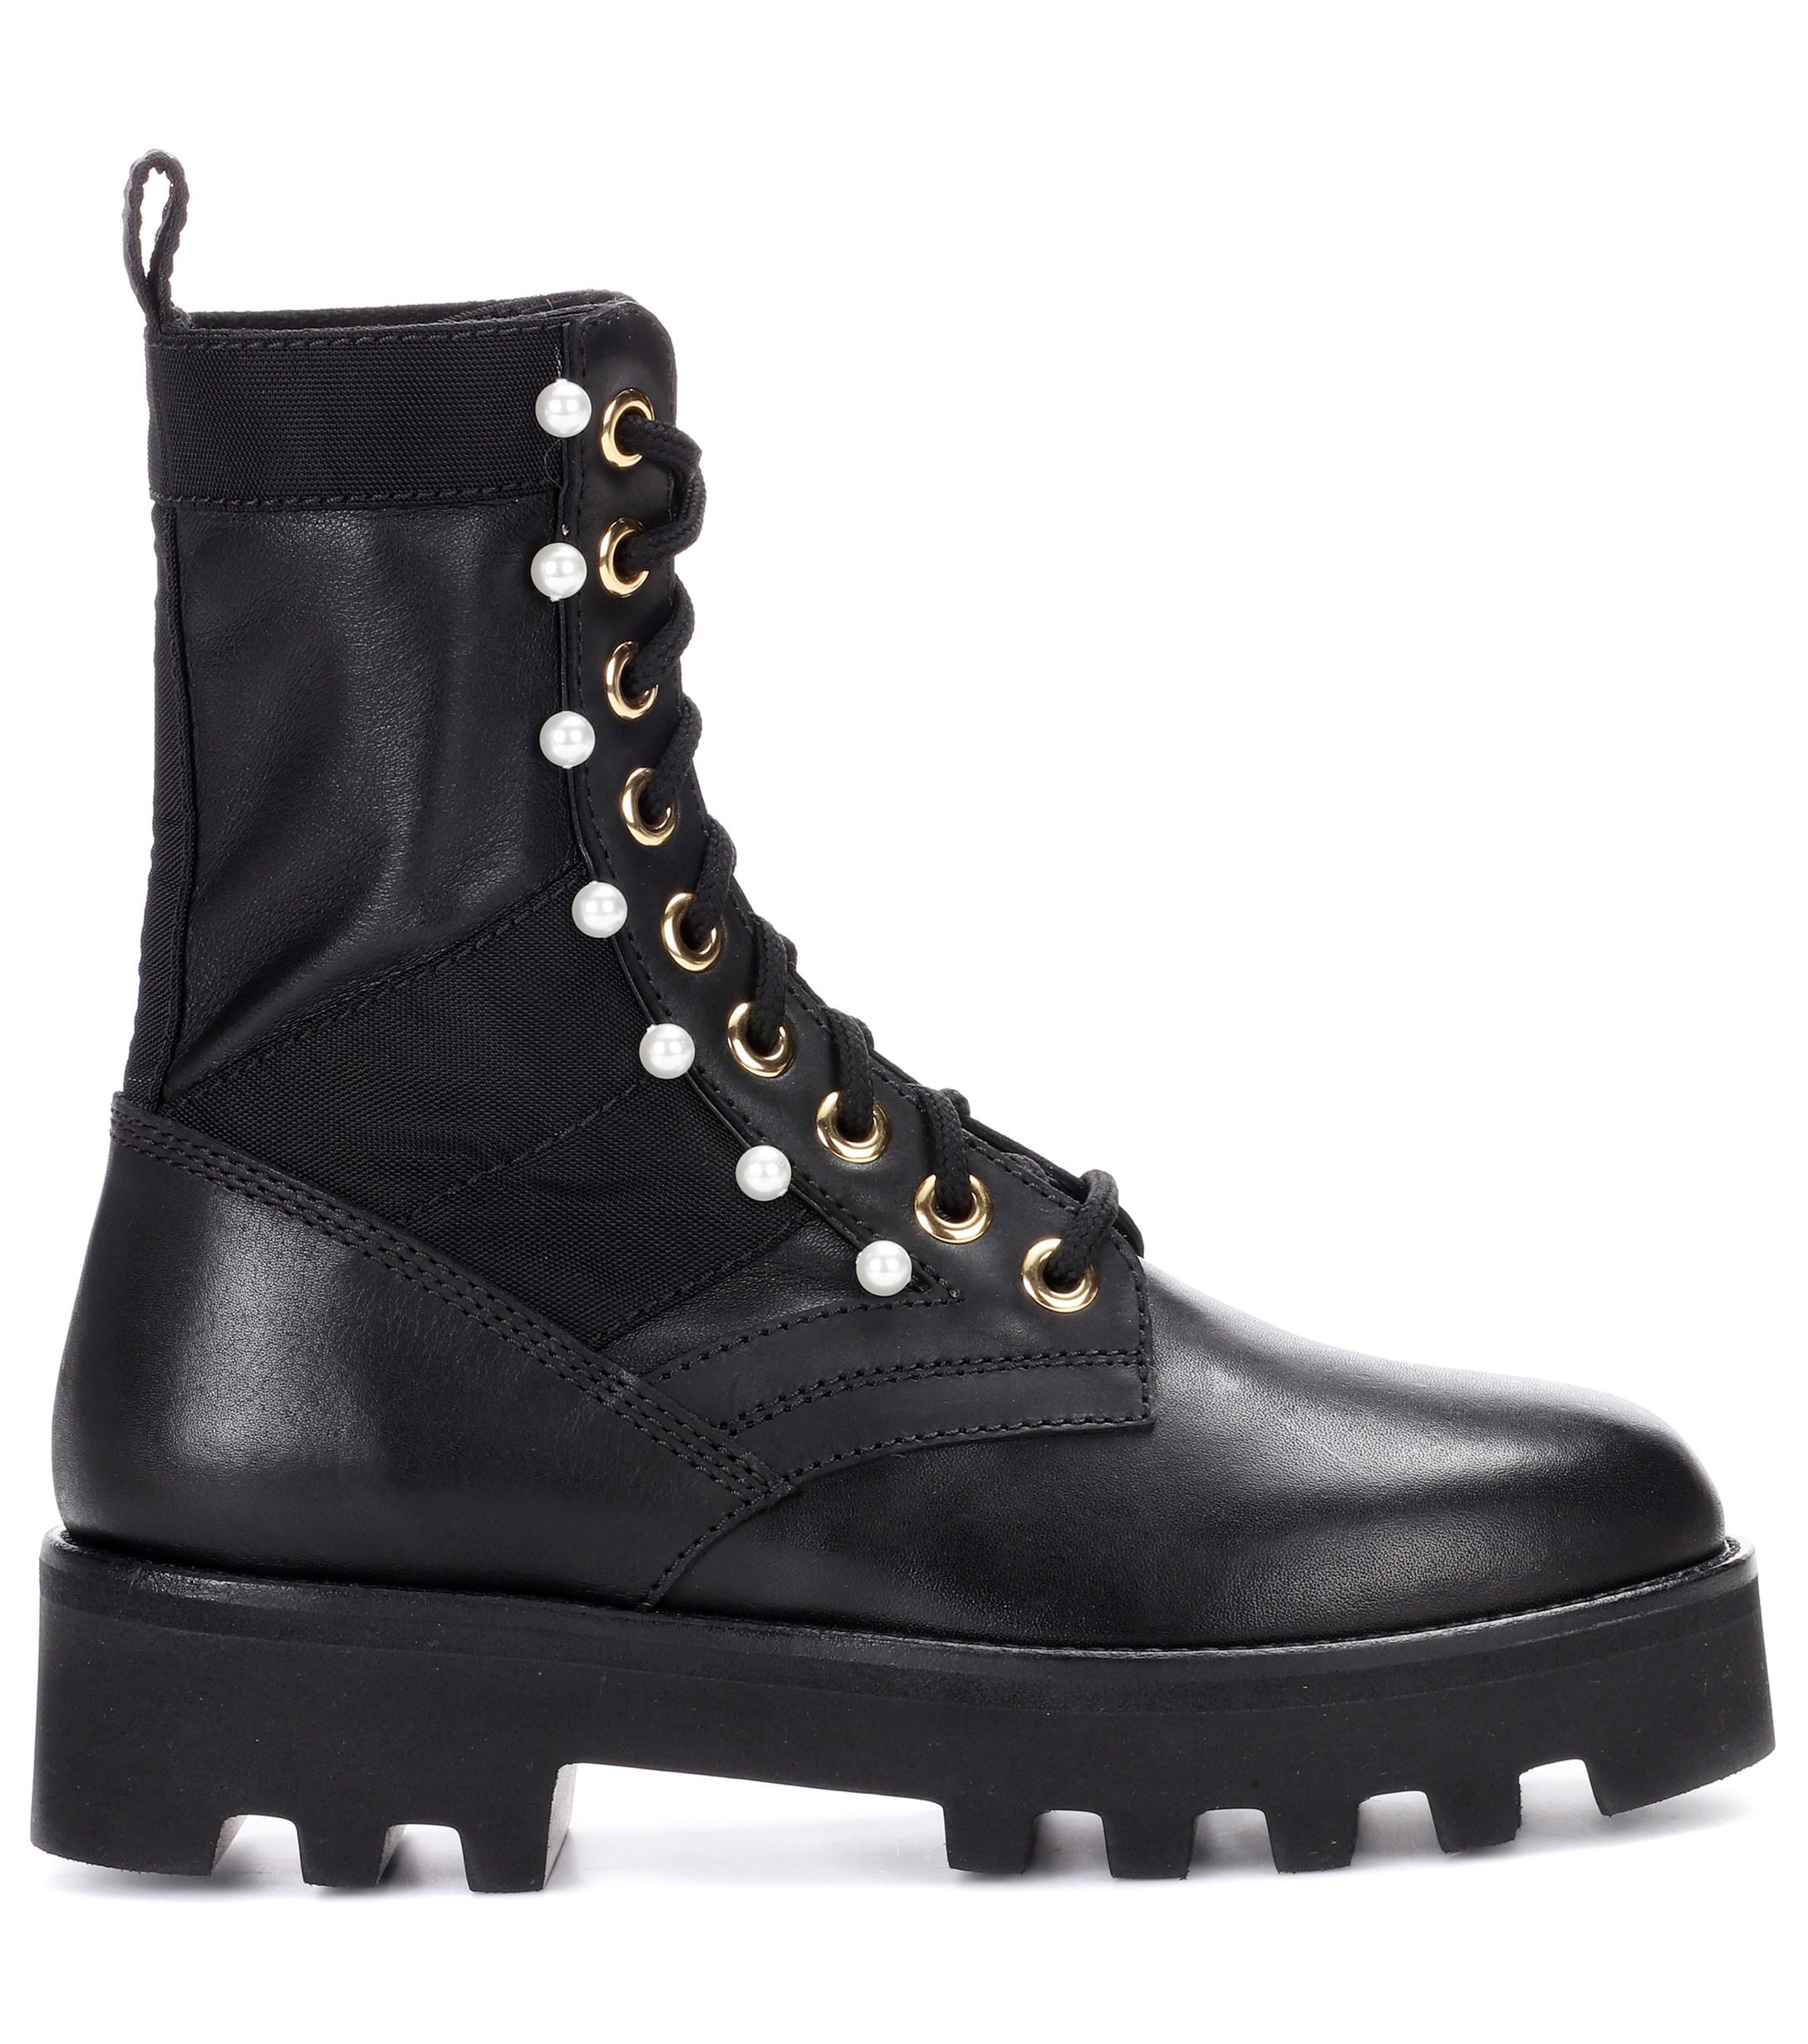 Altuzarra Embellished Leather Ankle Boots in Black - Lyst